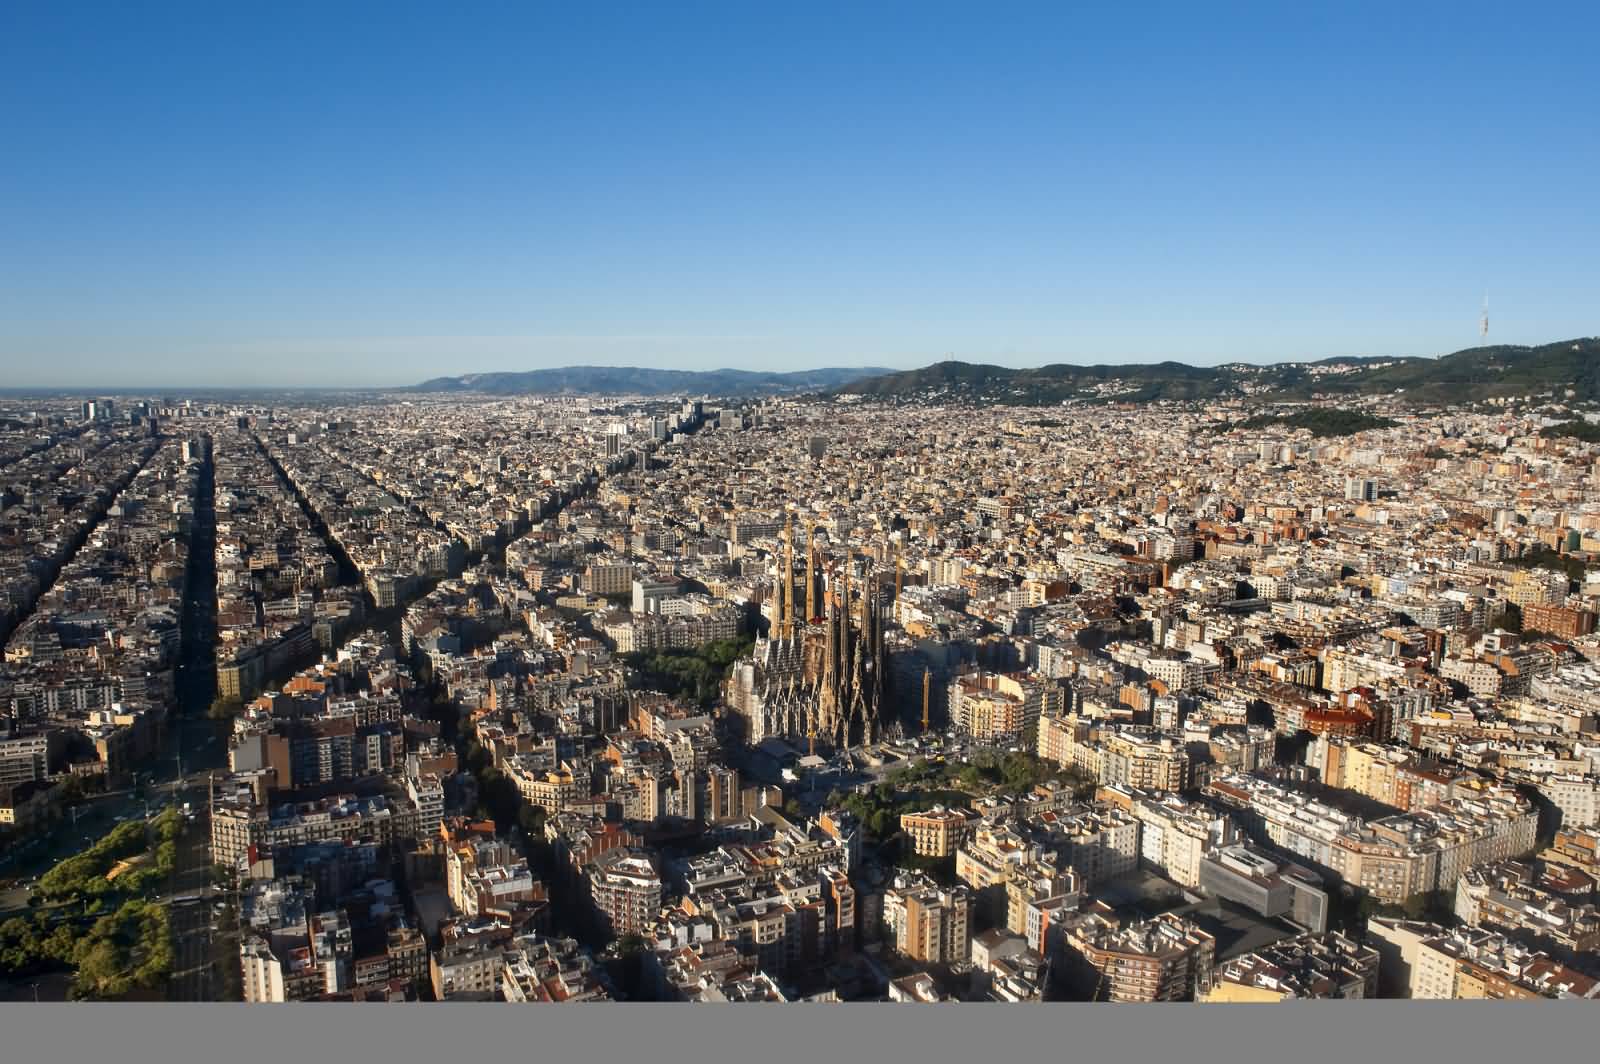 Adorable Aerial View Of The Sagrada Familia And Barcelona City